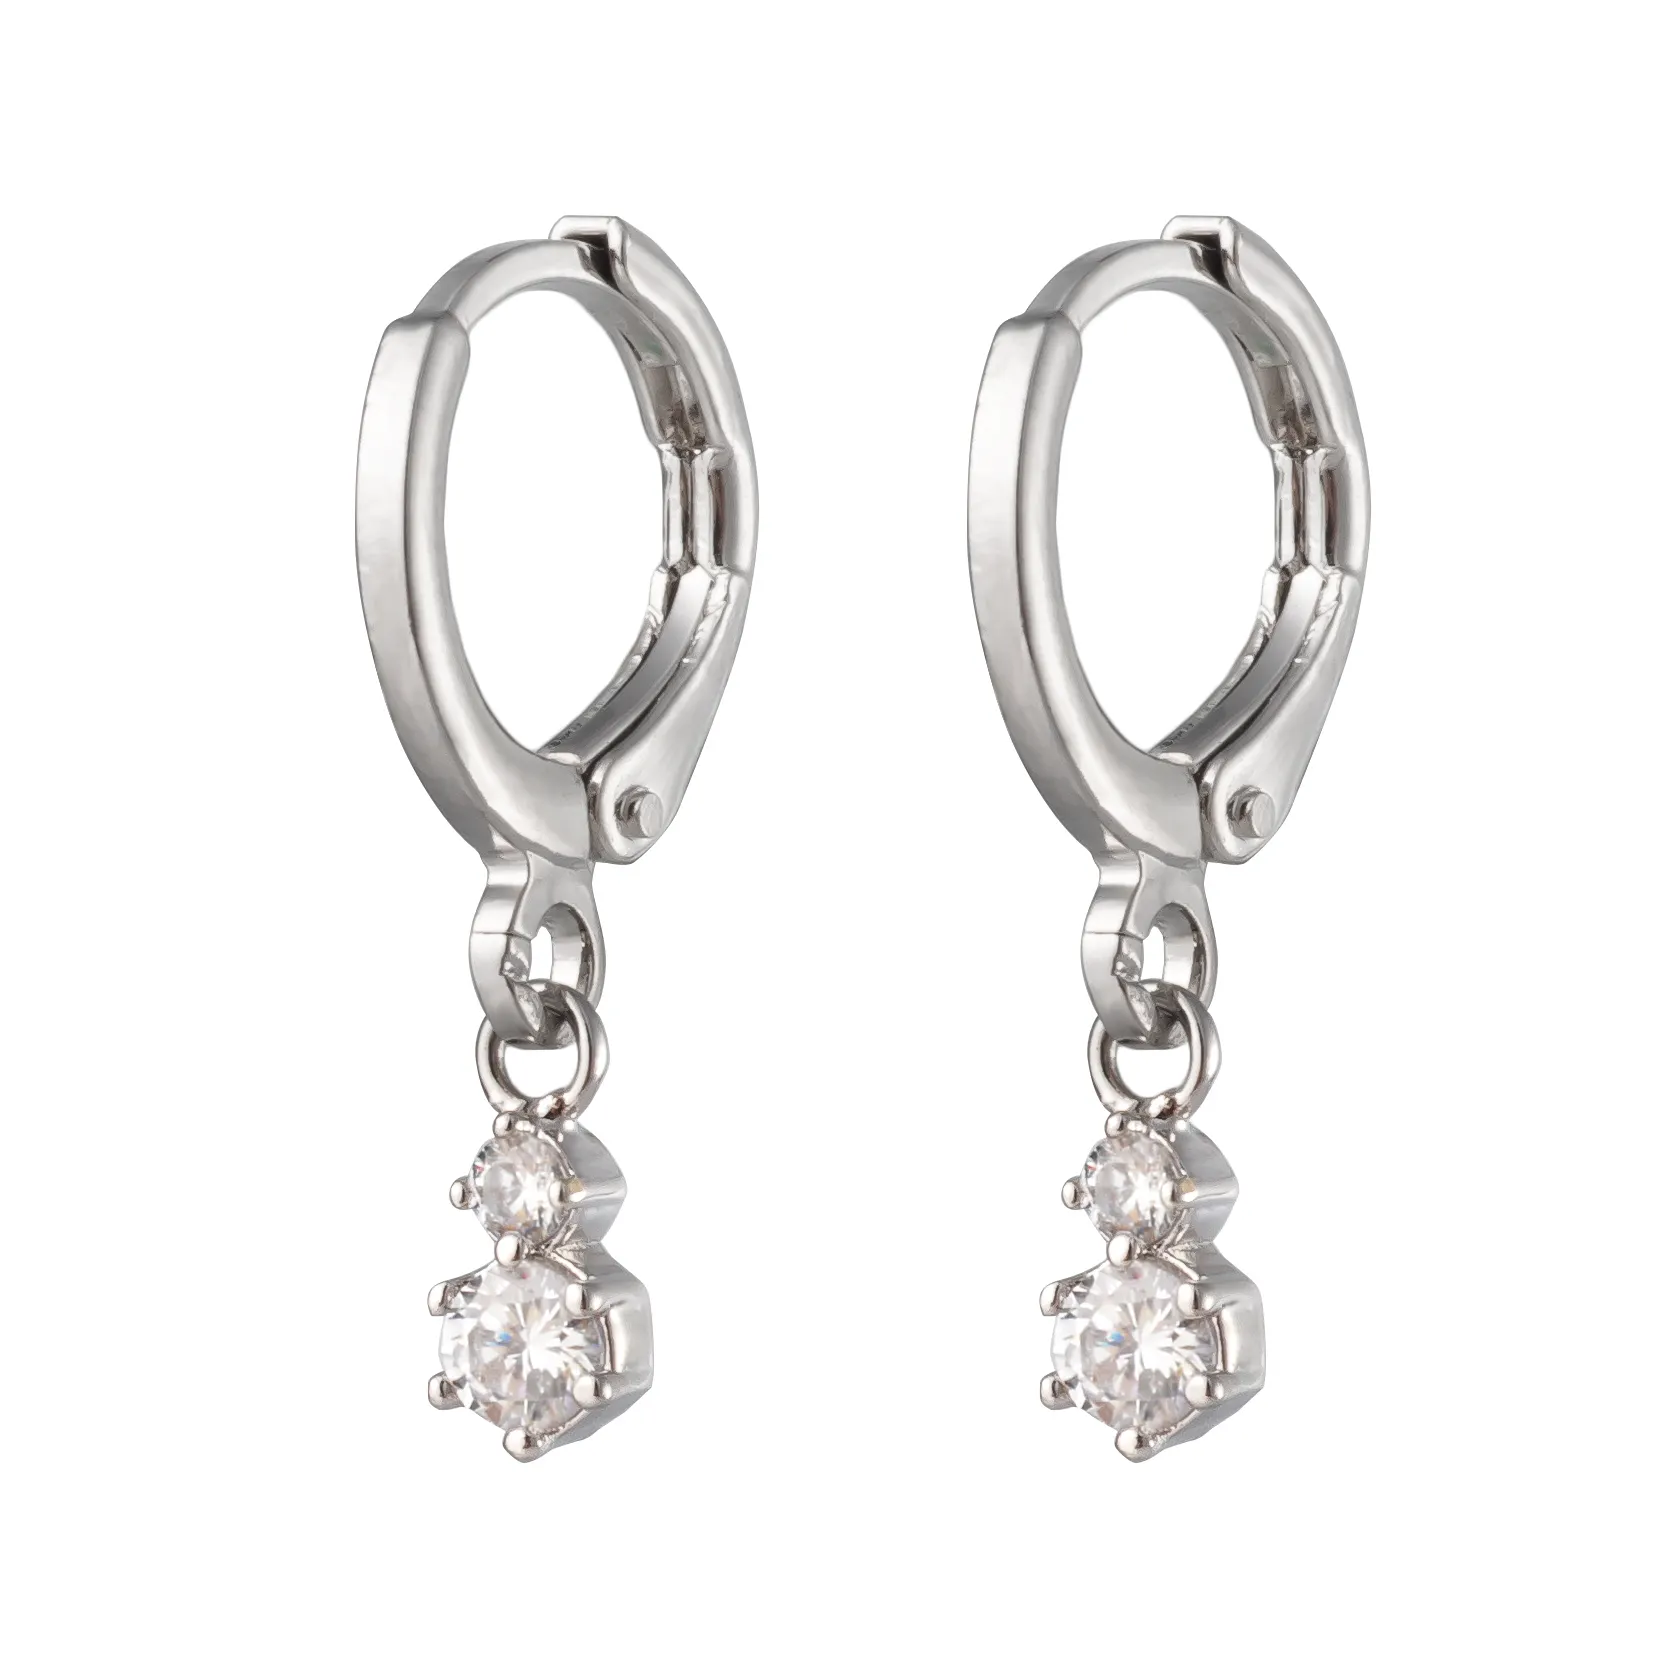 Ellie CZ Earhanger Fashion Earrings Hoop Rhodium Plated High Quality Earrings